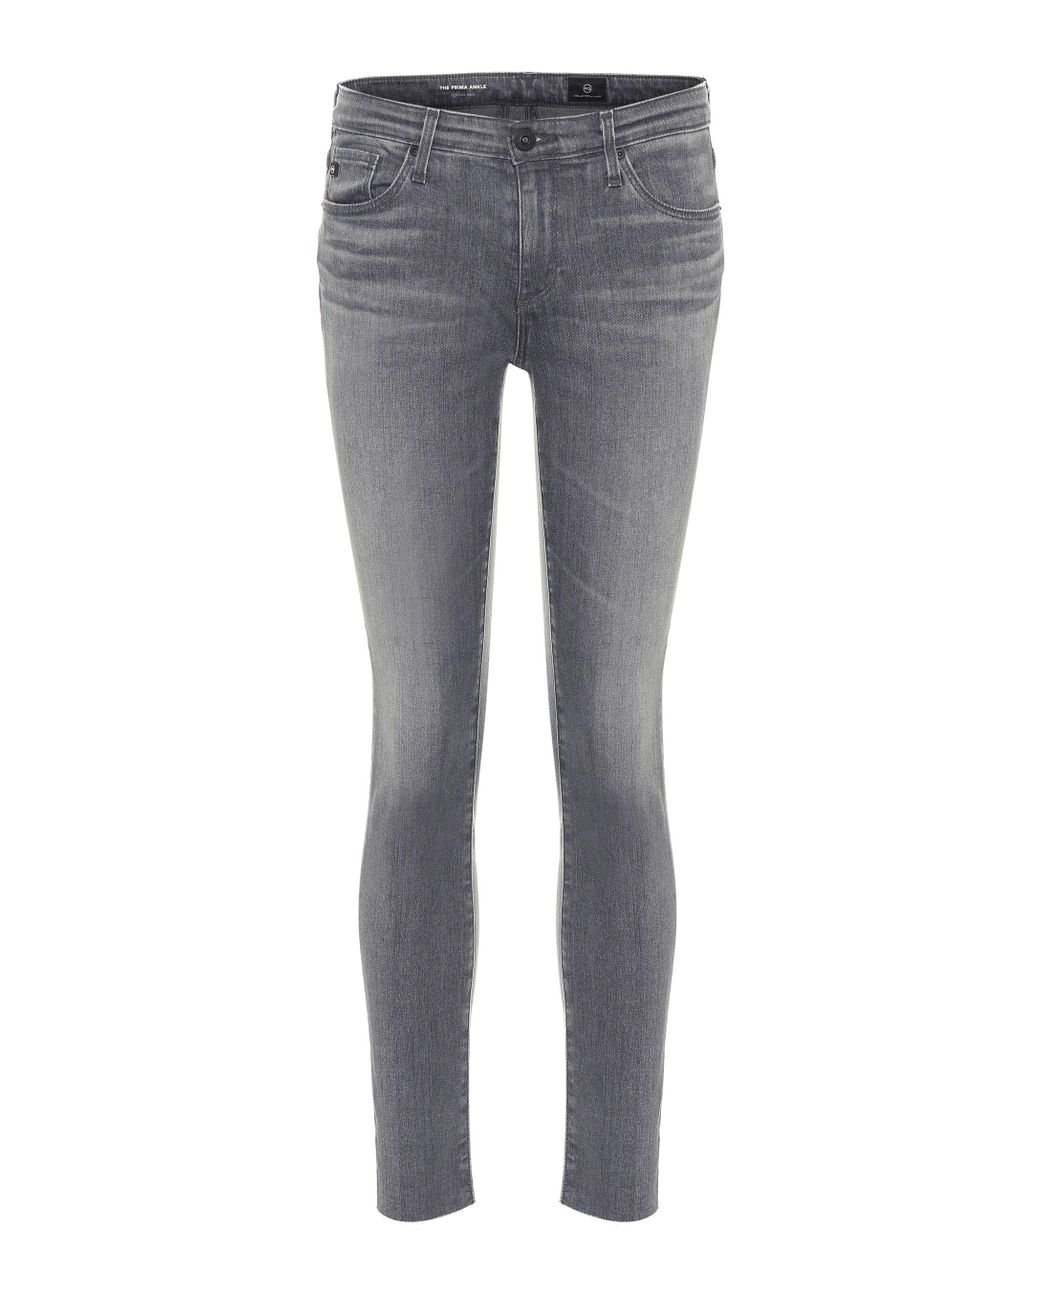 AG Jeans Denim The Prima Ankle Skinny Jeans in Grey (Gray) - Lyst